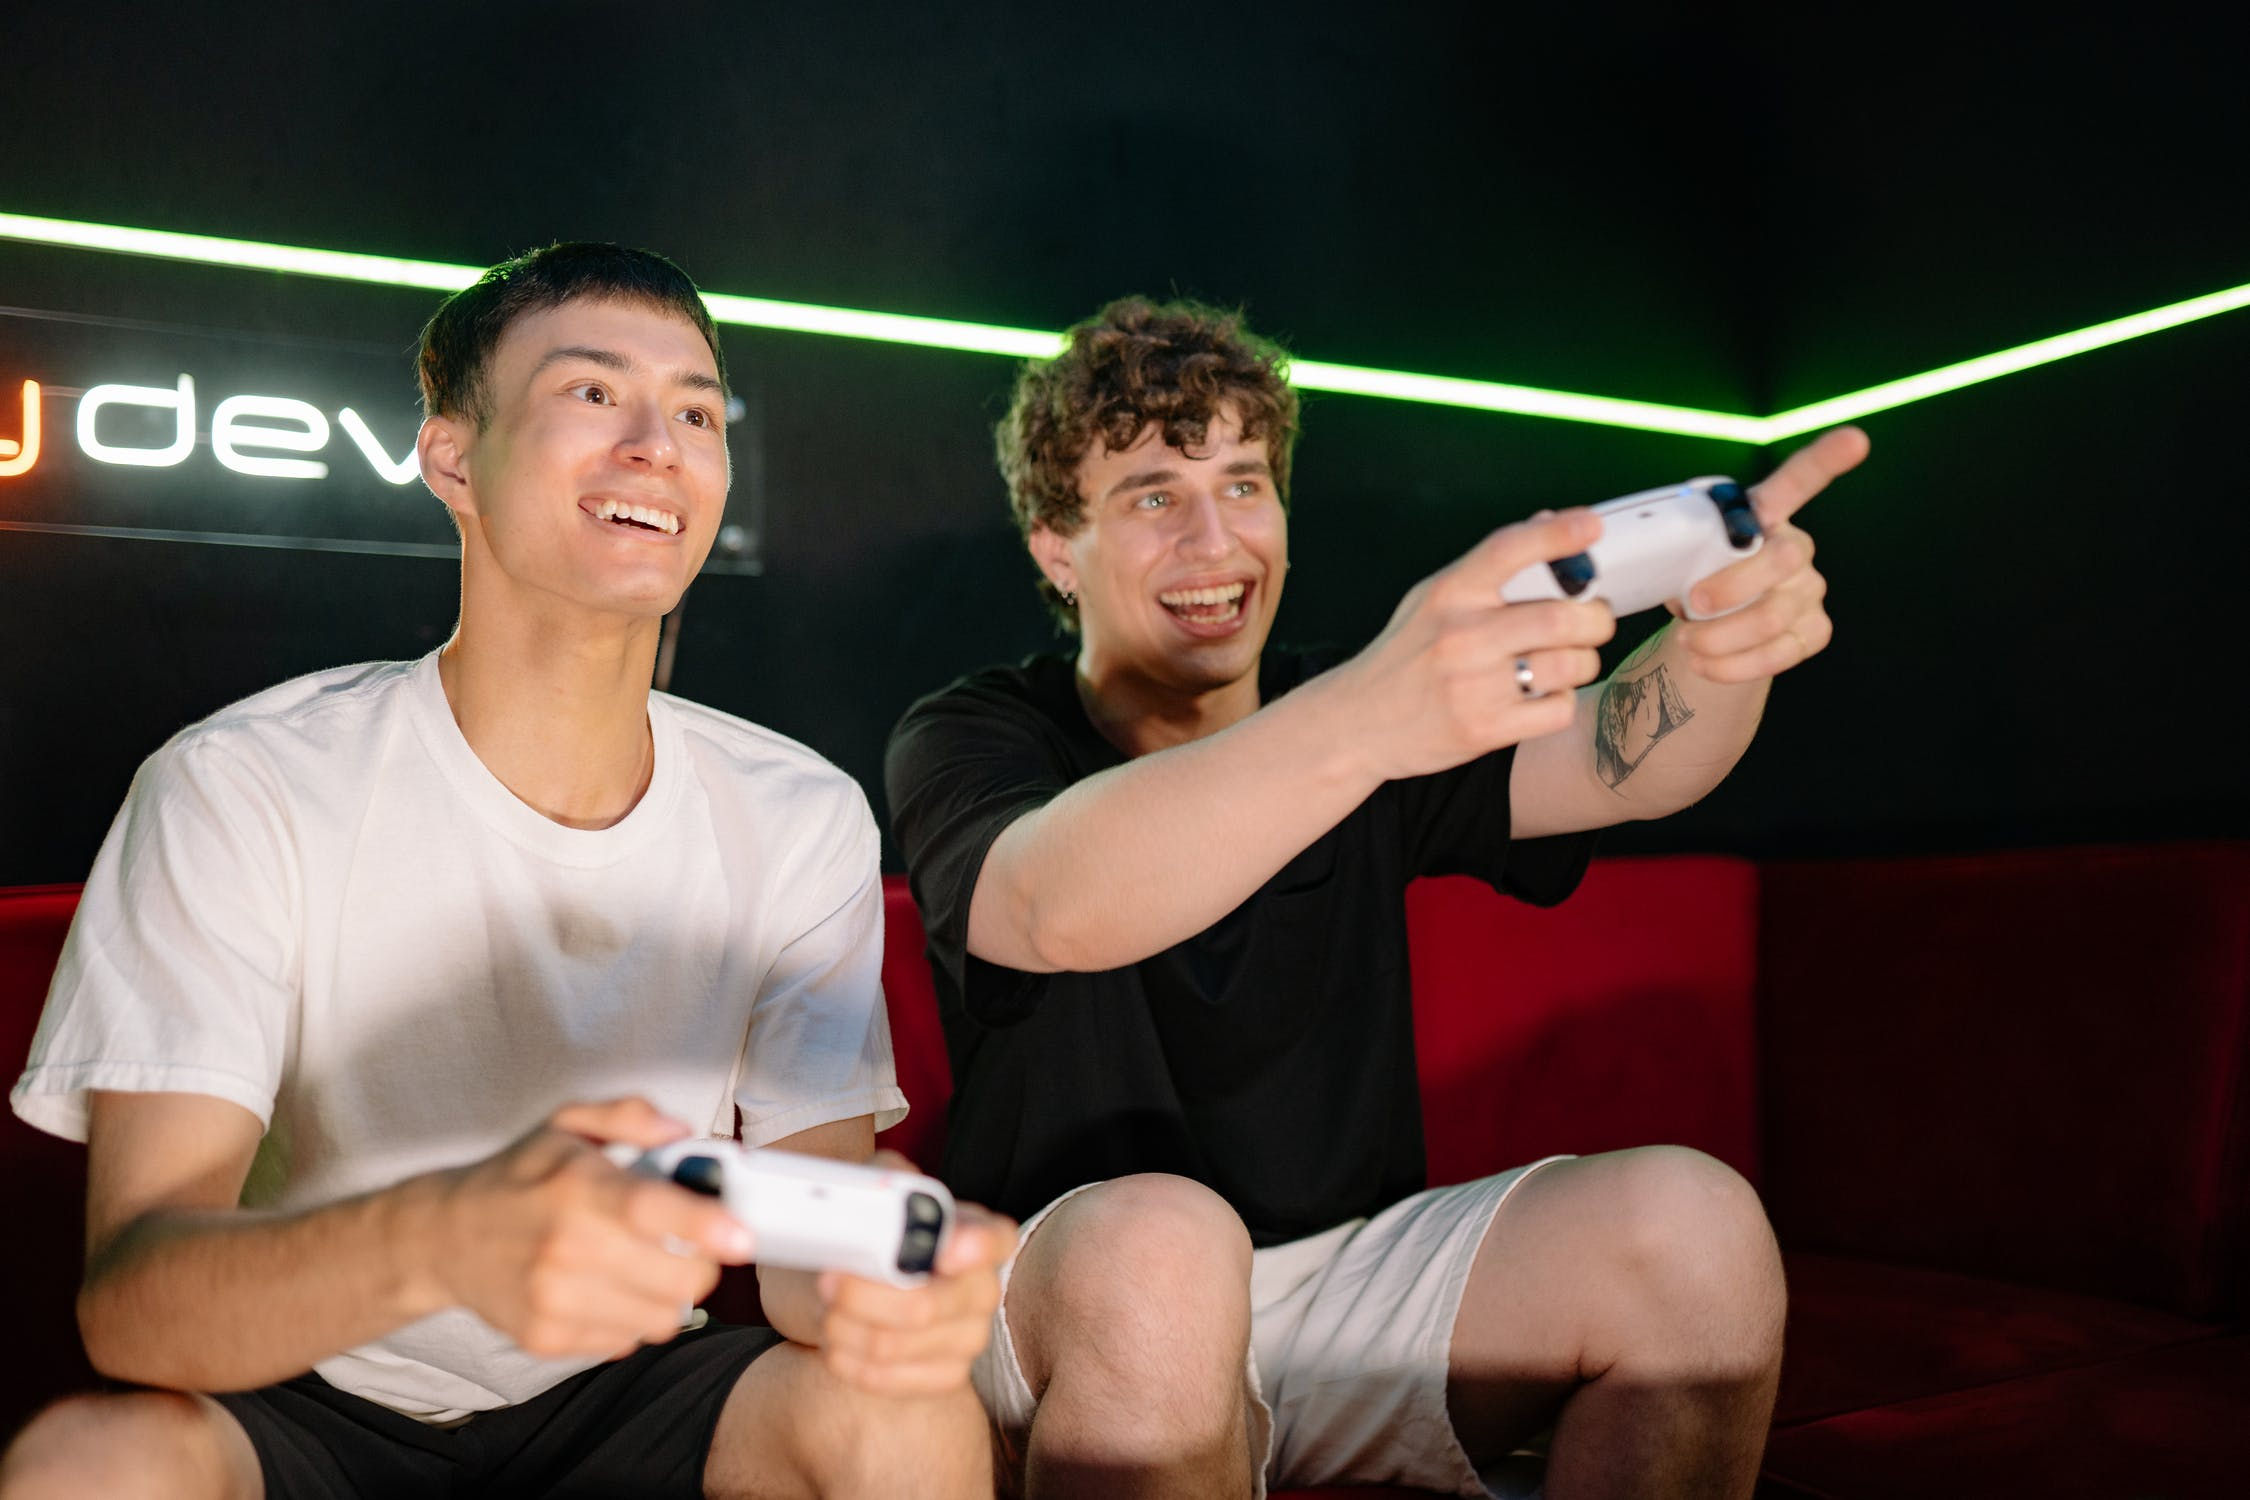 boys enjoying an online game